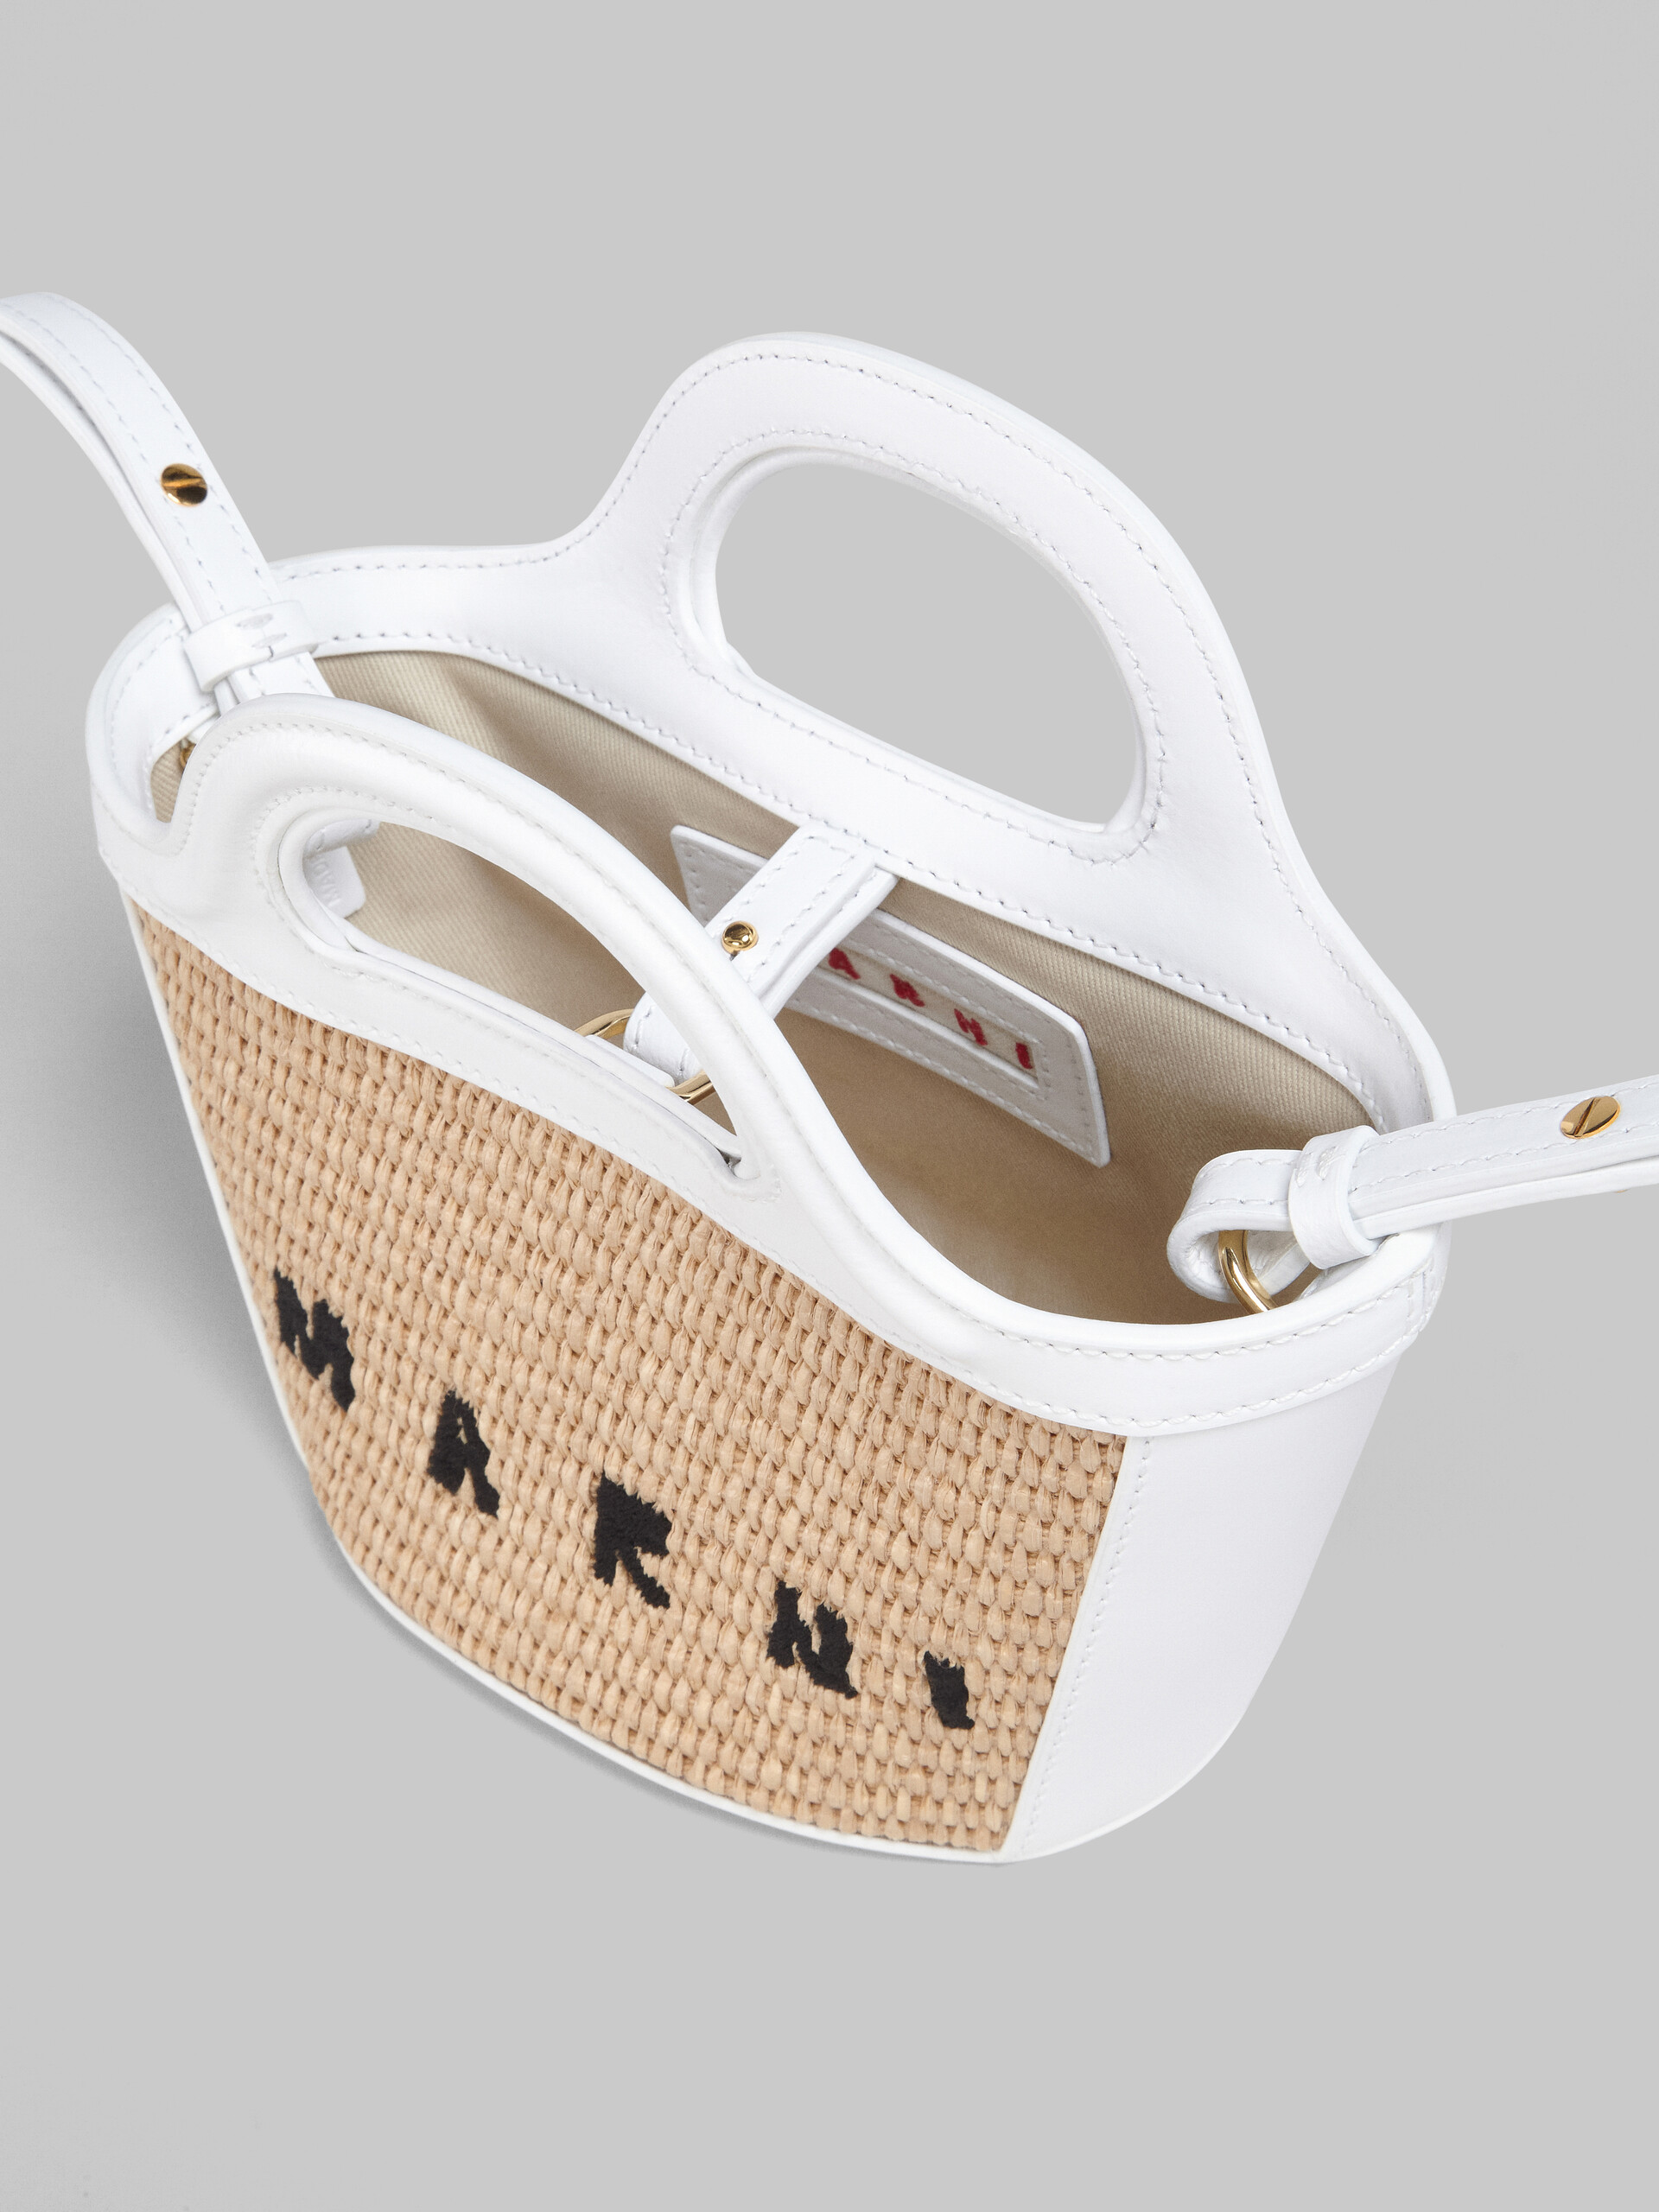 Tropicalia Micro Bag in white leather and raffia - Handbag - Image 4